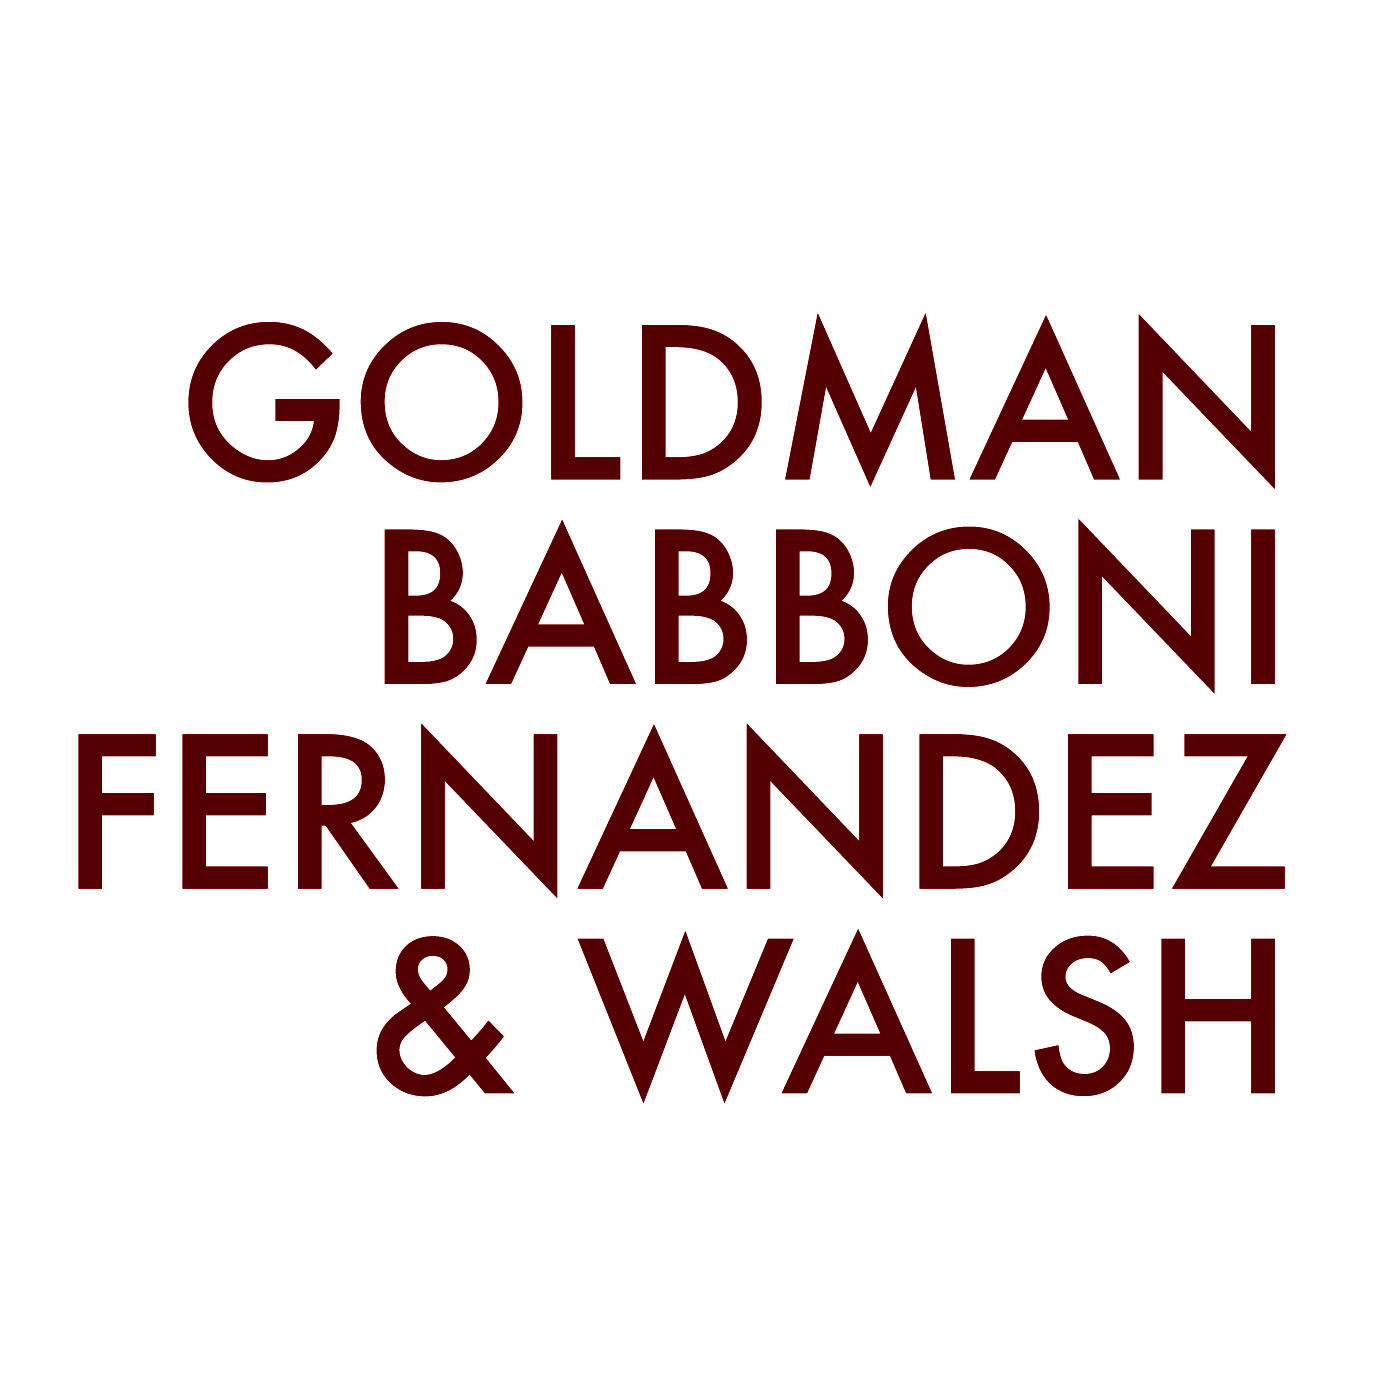 Goldman Babboni Fernandez & Walsh Logo